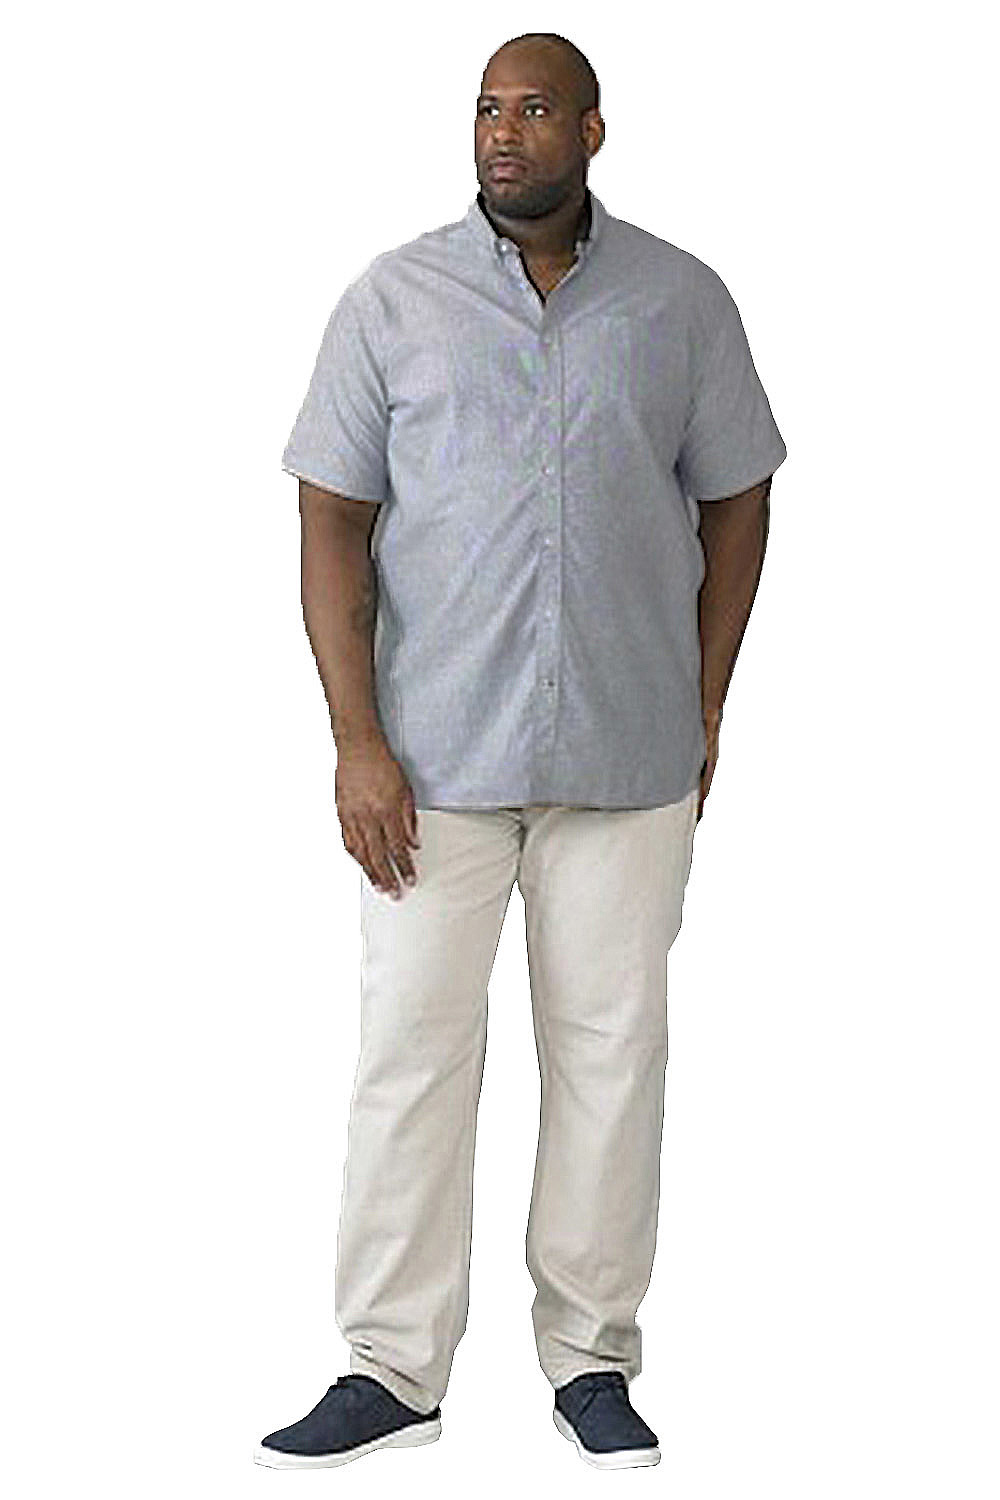 Duke D555 Mens Big Tall King Size Shirts Cotton Casual Summer Short Sleeved Tops Ebay